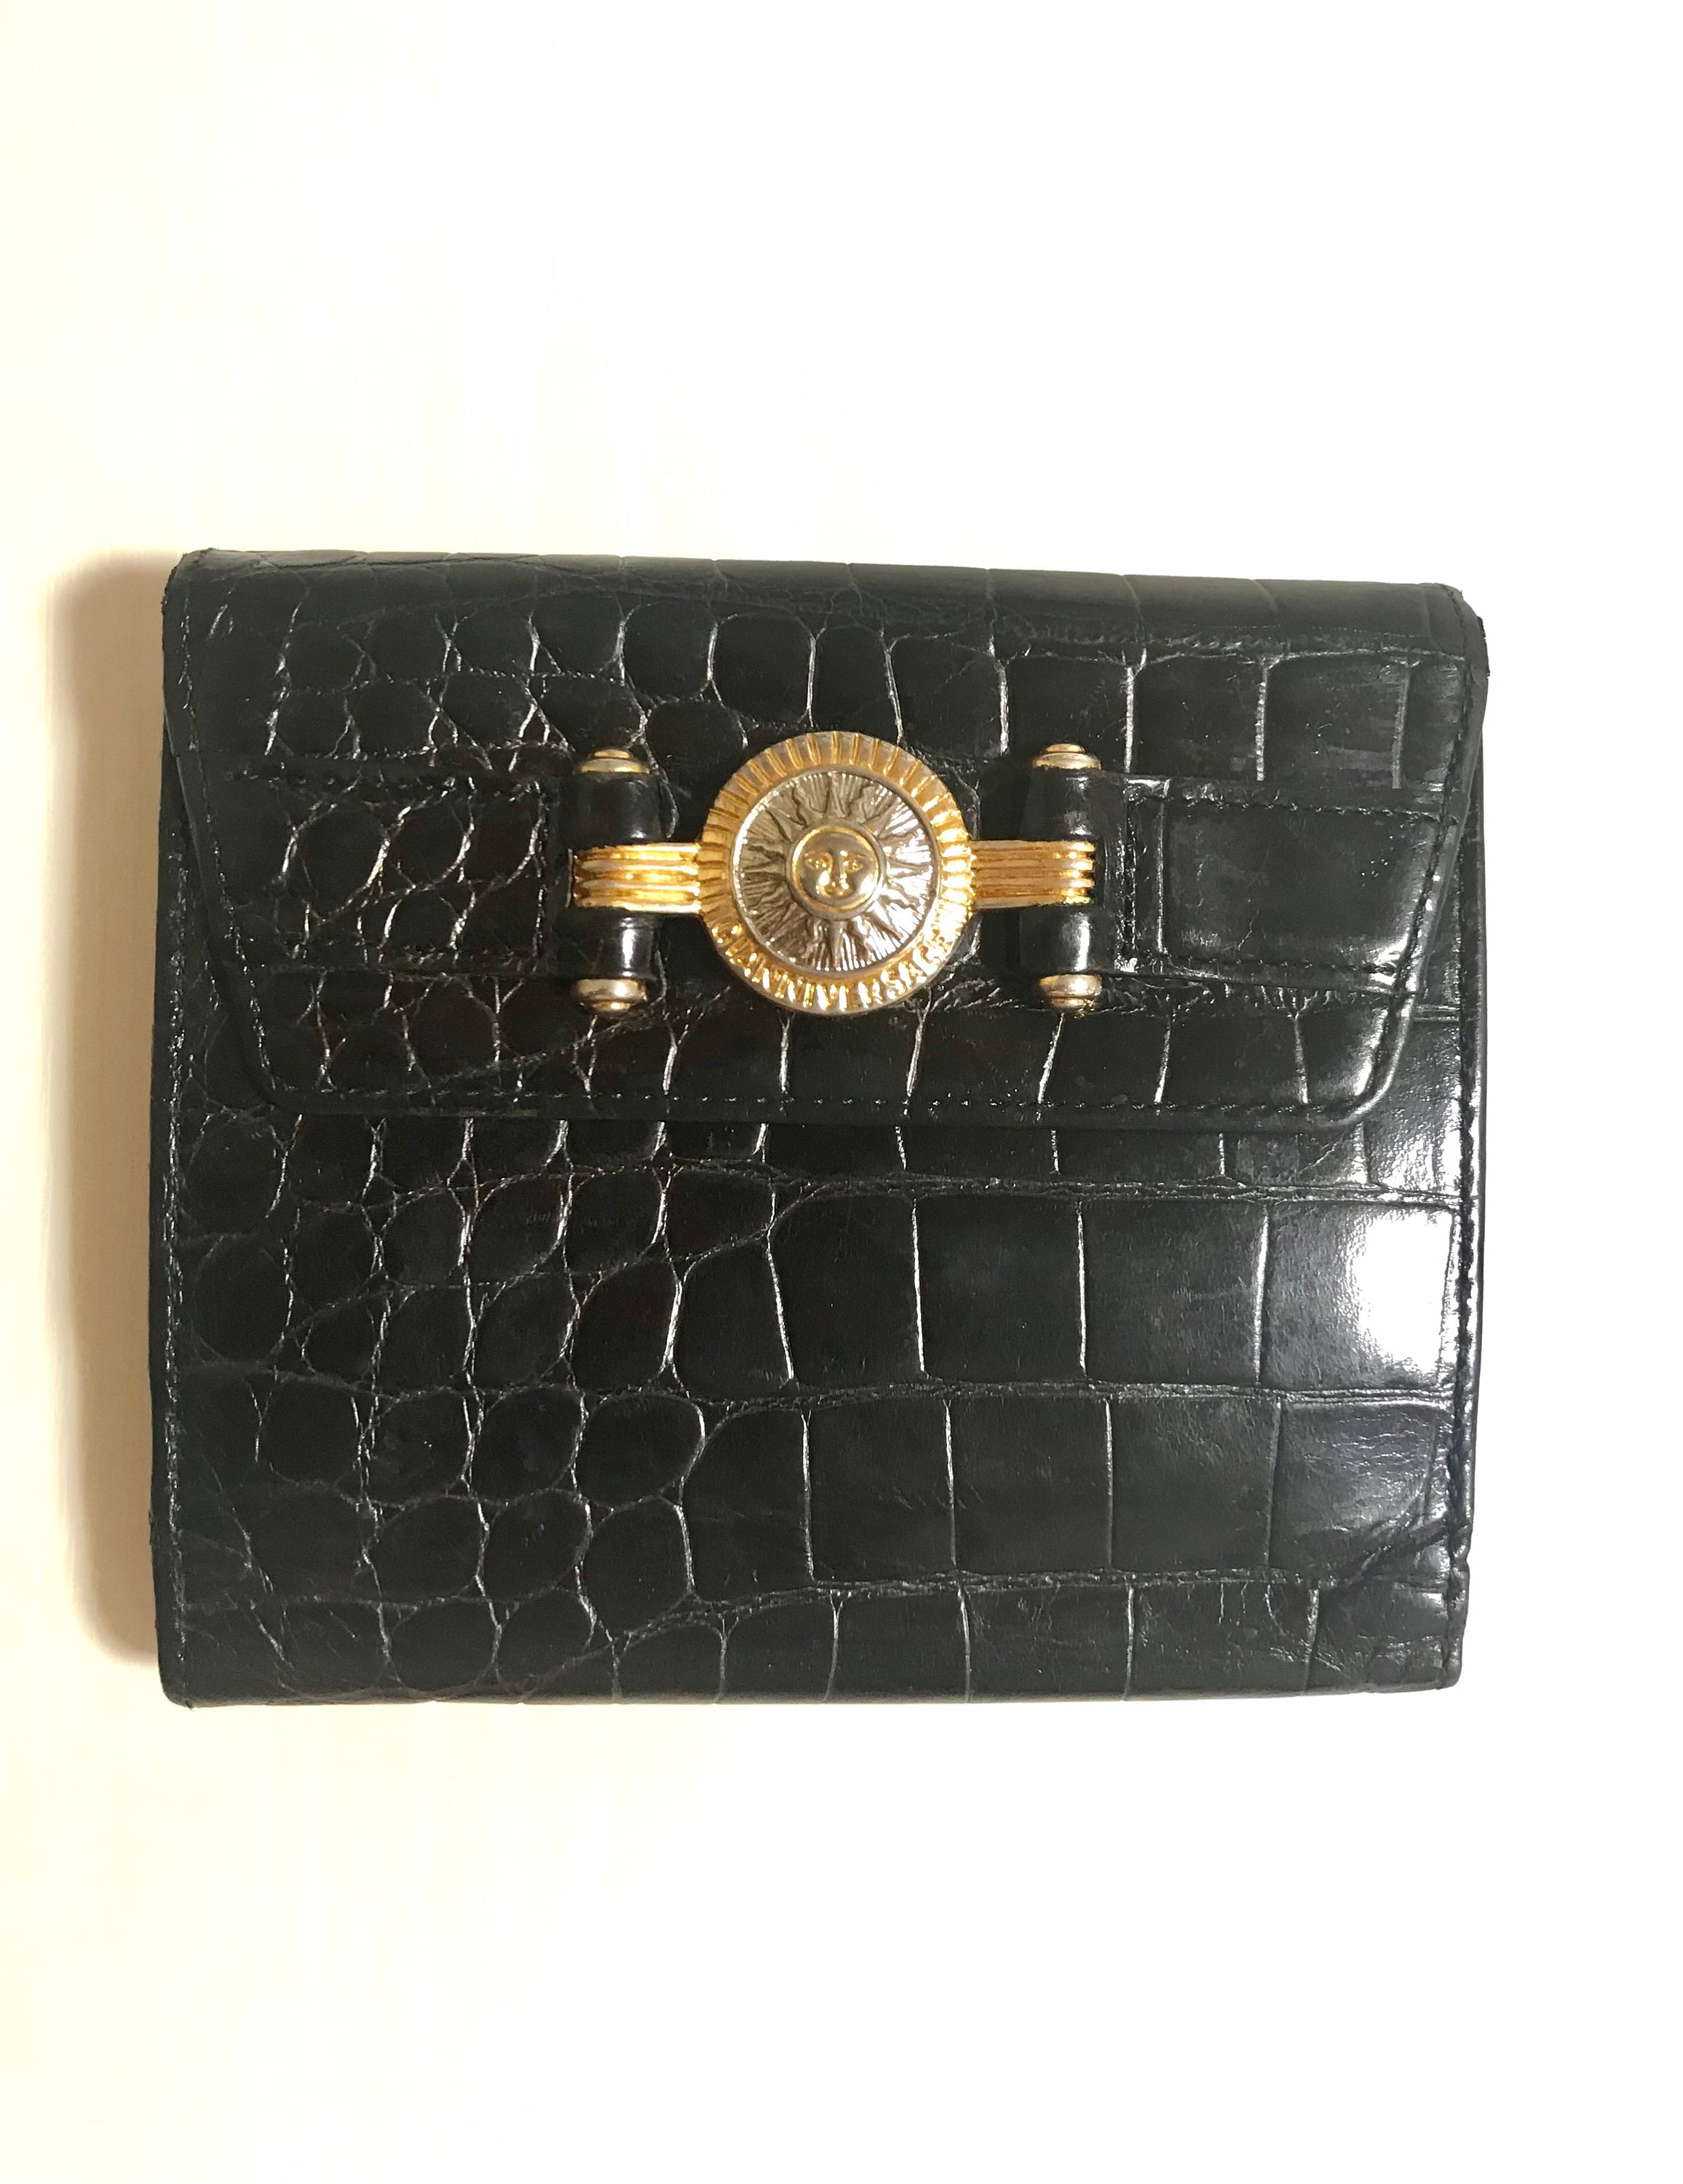 Vintage Gianni Versace Black Croc Embossed Leather Wallet. Golden